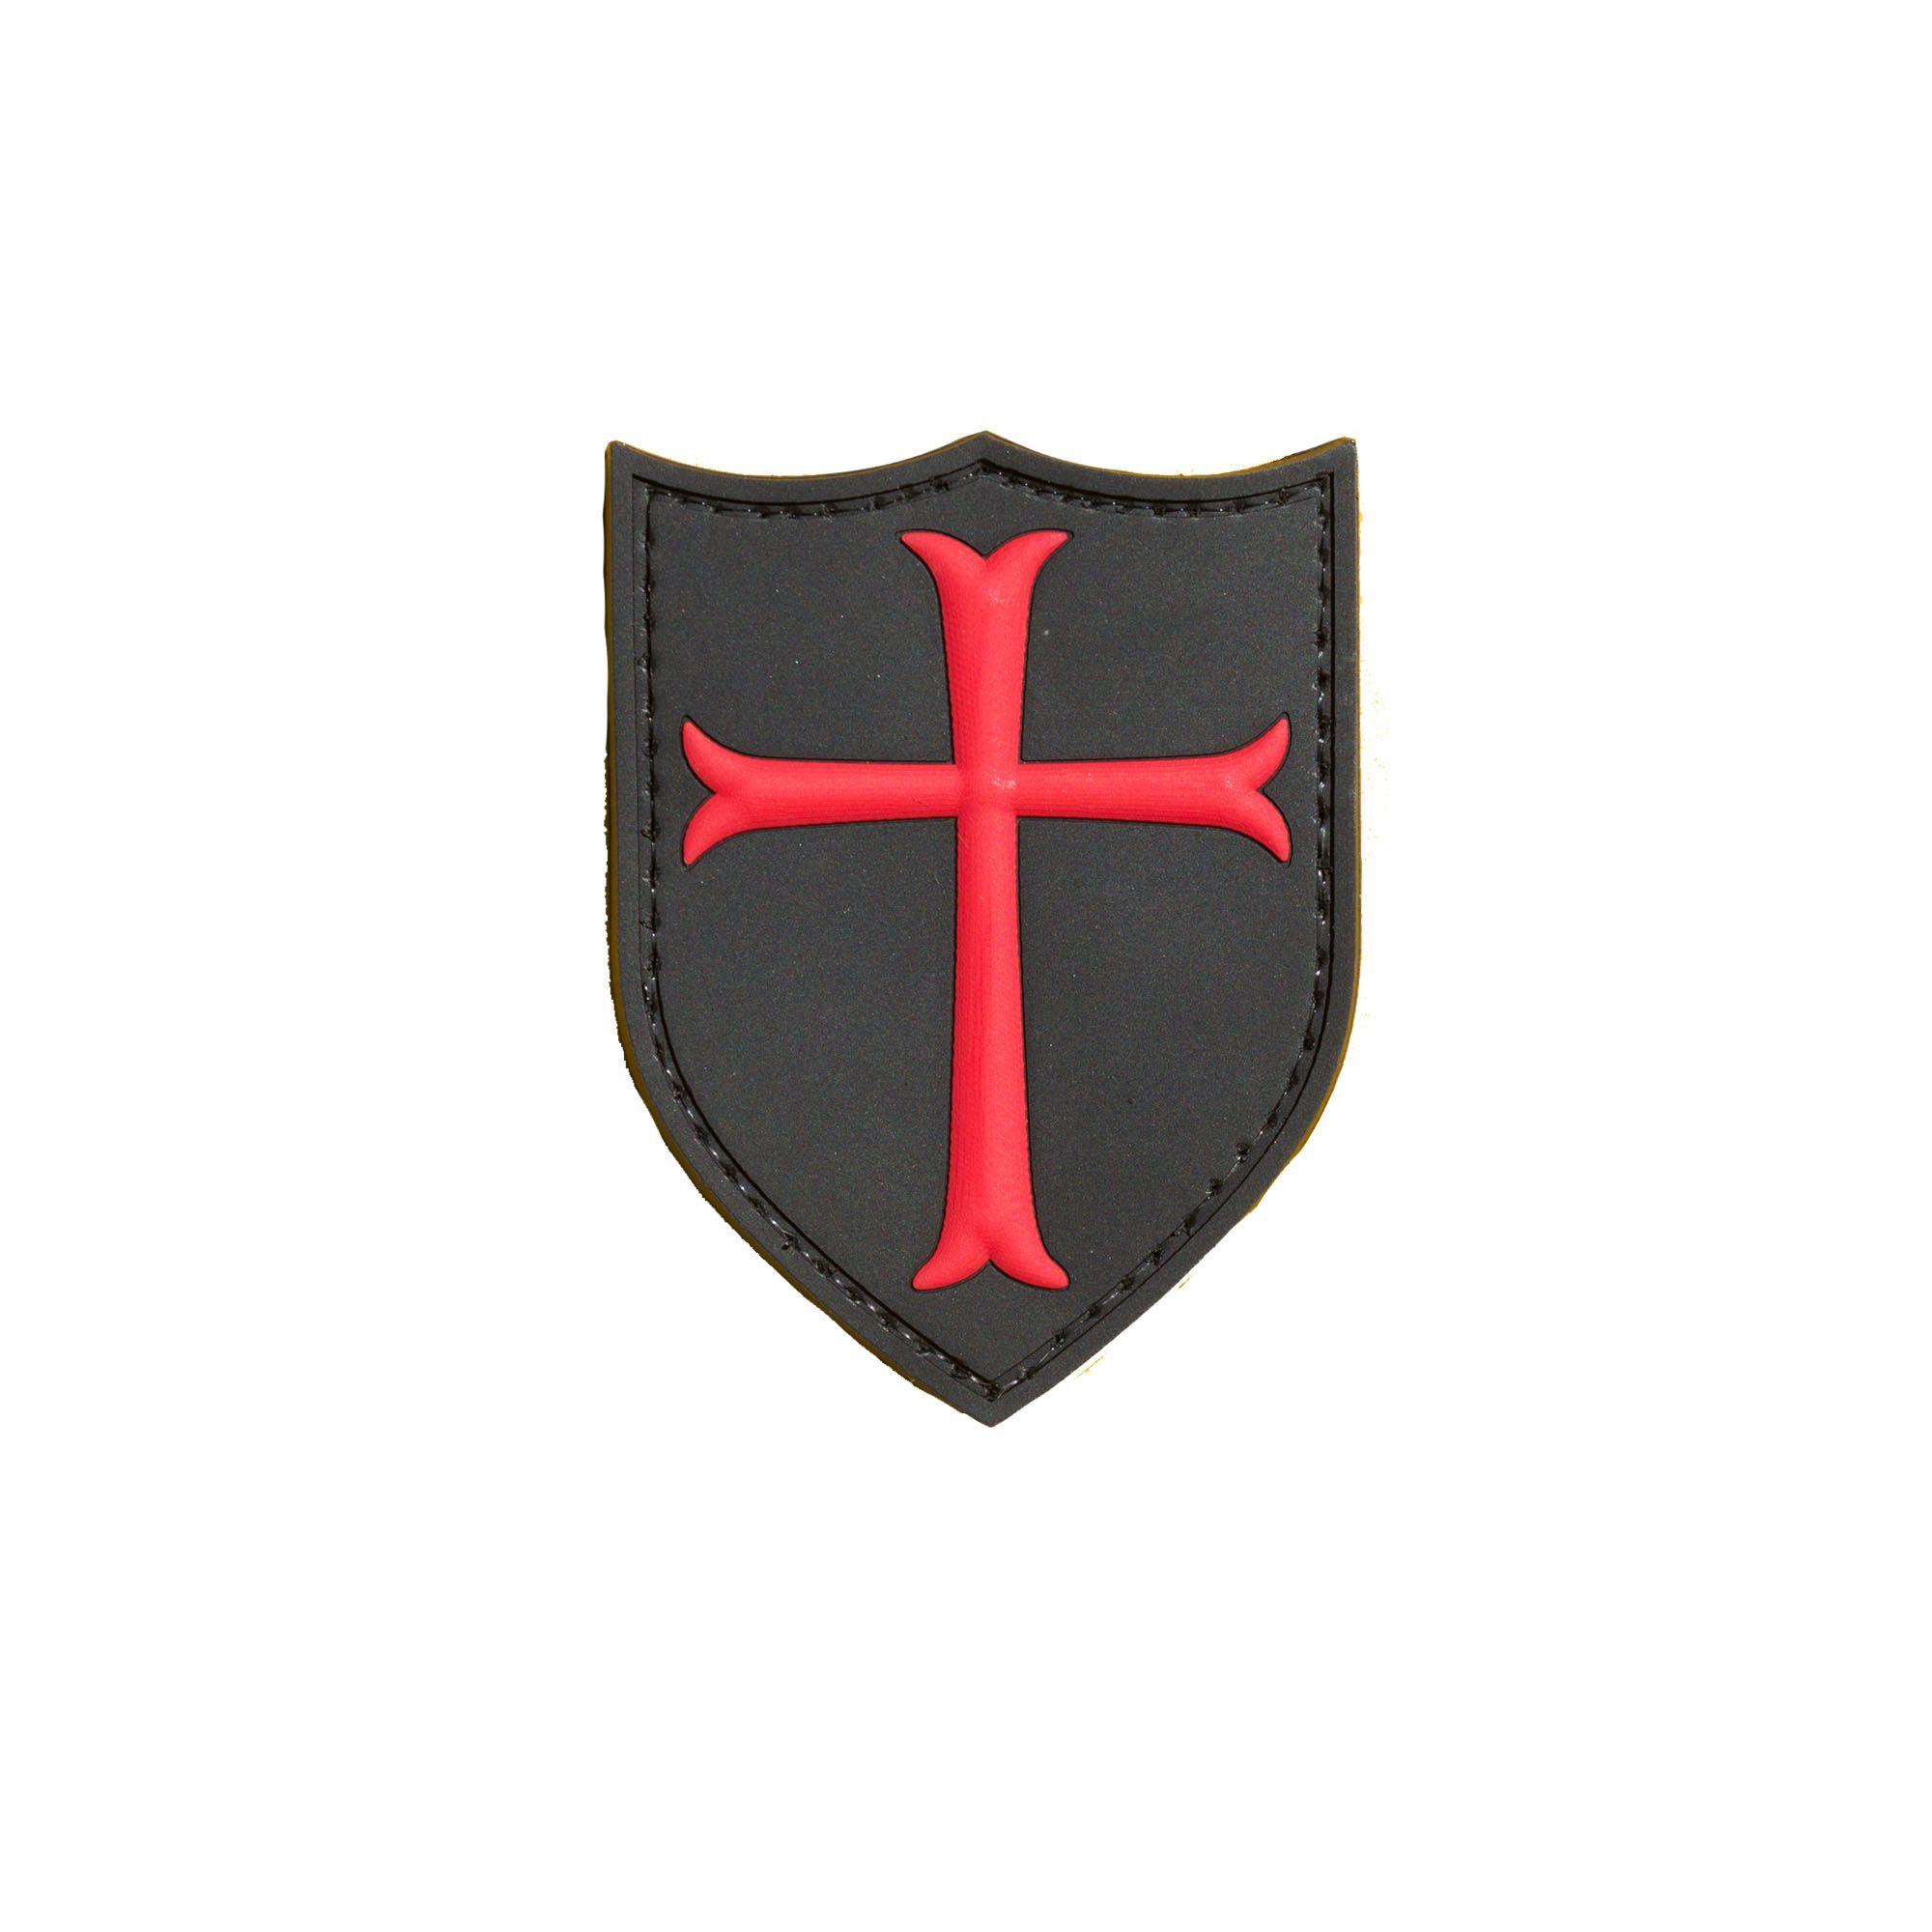 Crusader Cross Logo - Crusader Cross patch